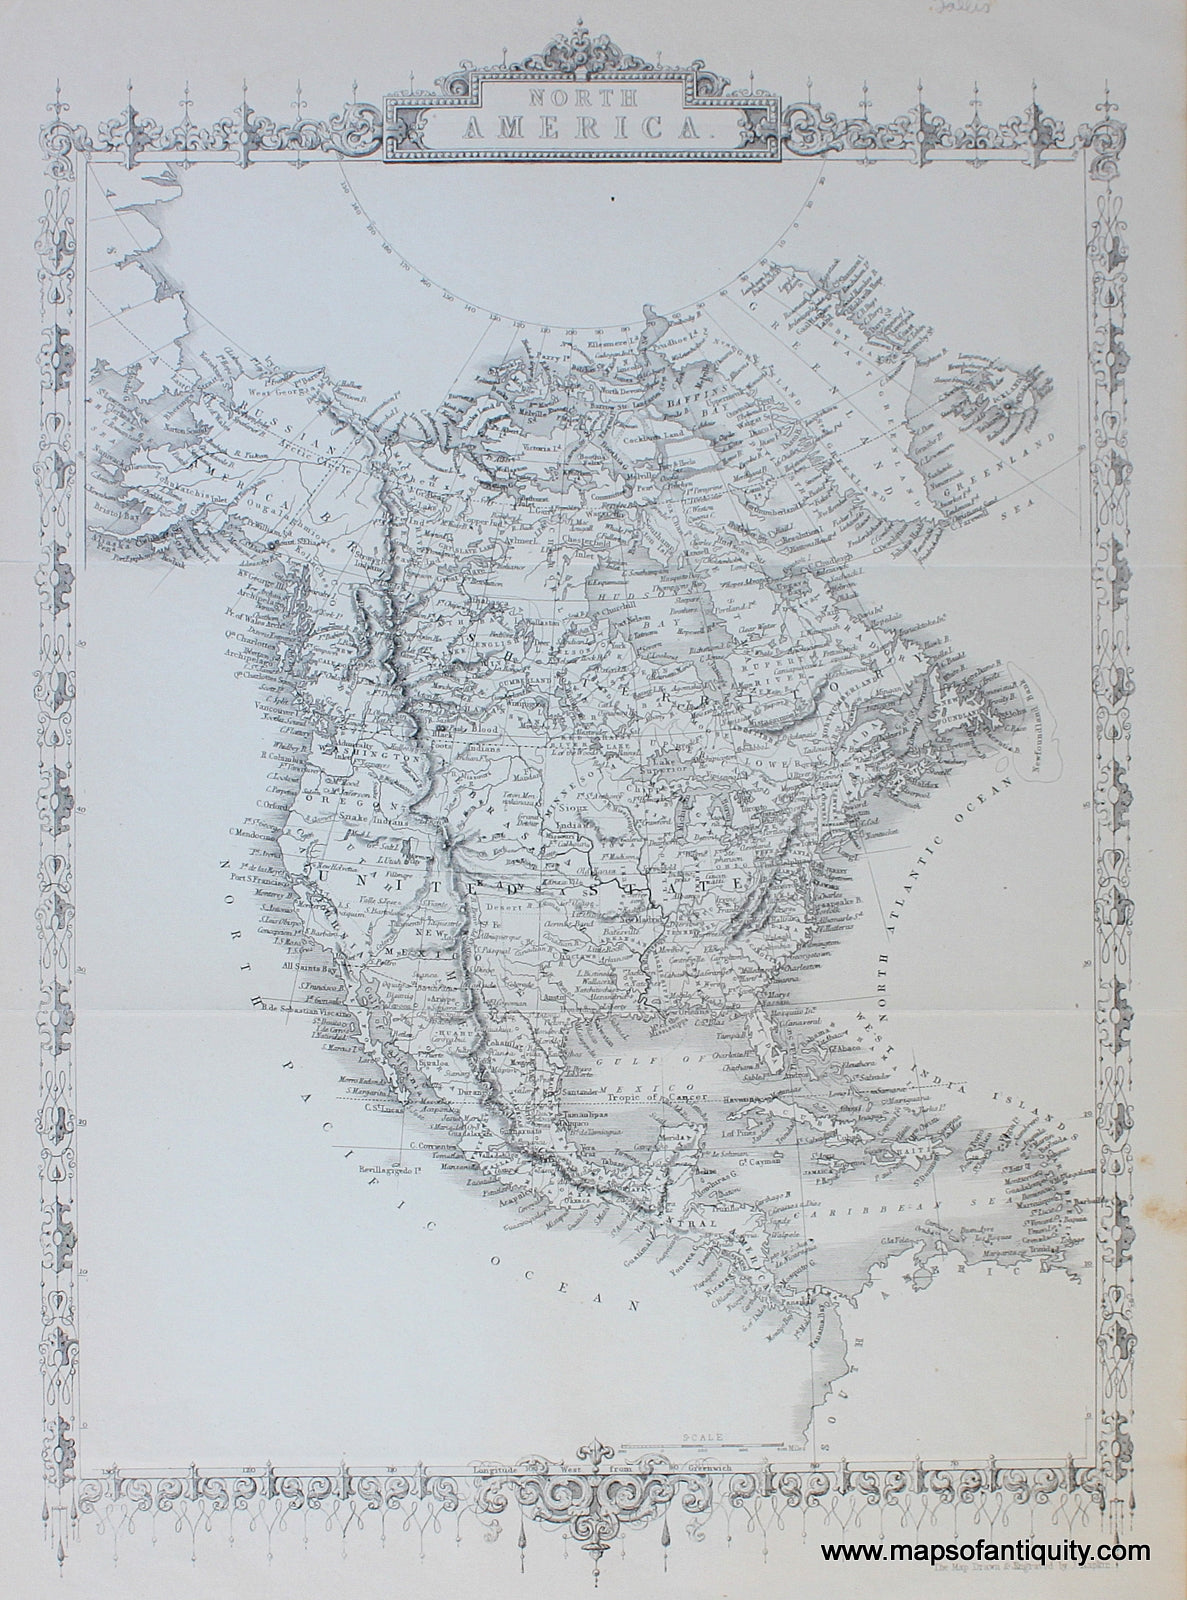 Engraved-North-America**********--North-America-North-America-General-1850-Rapkin-Maps-Of-Antiquity